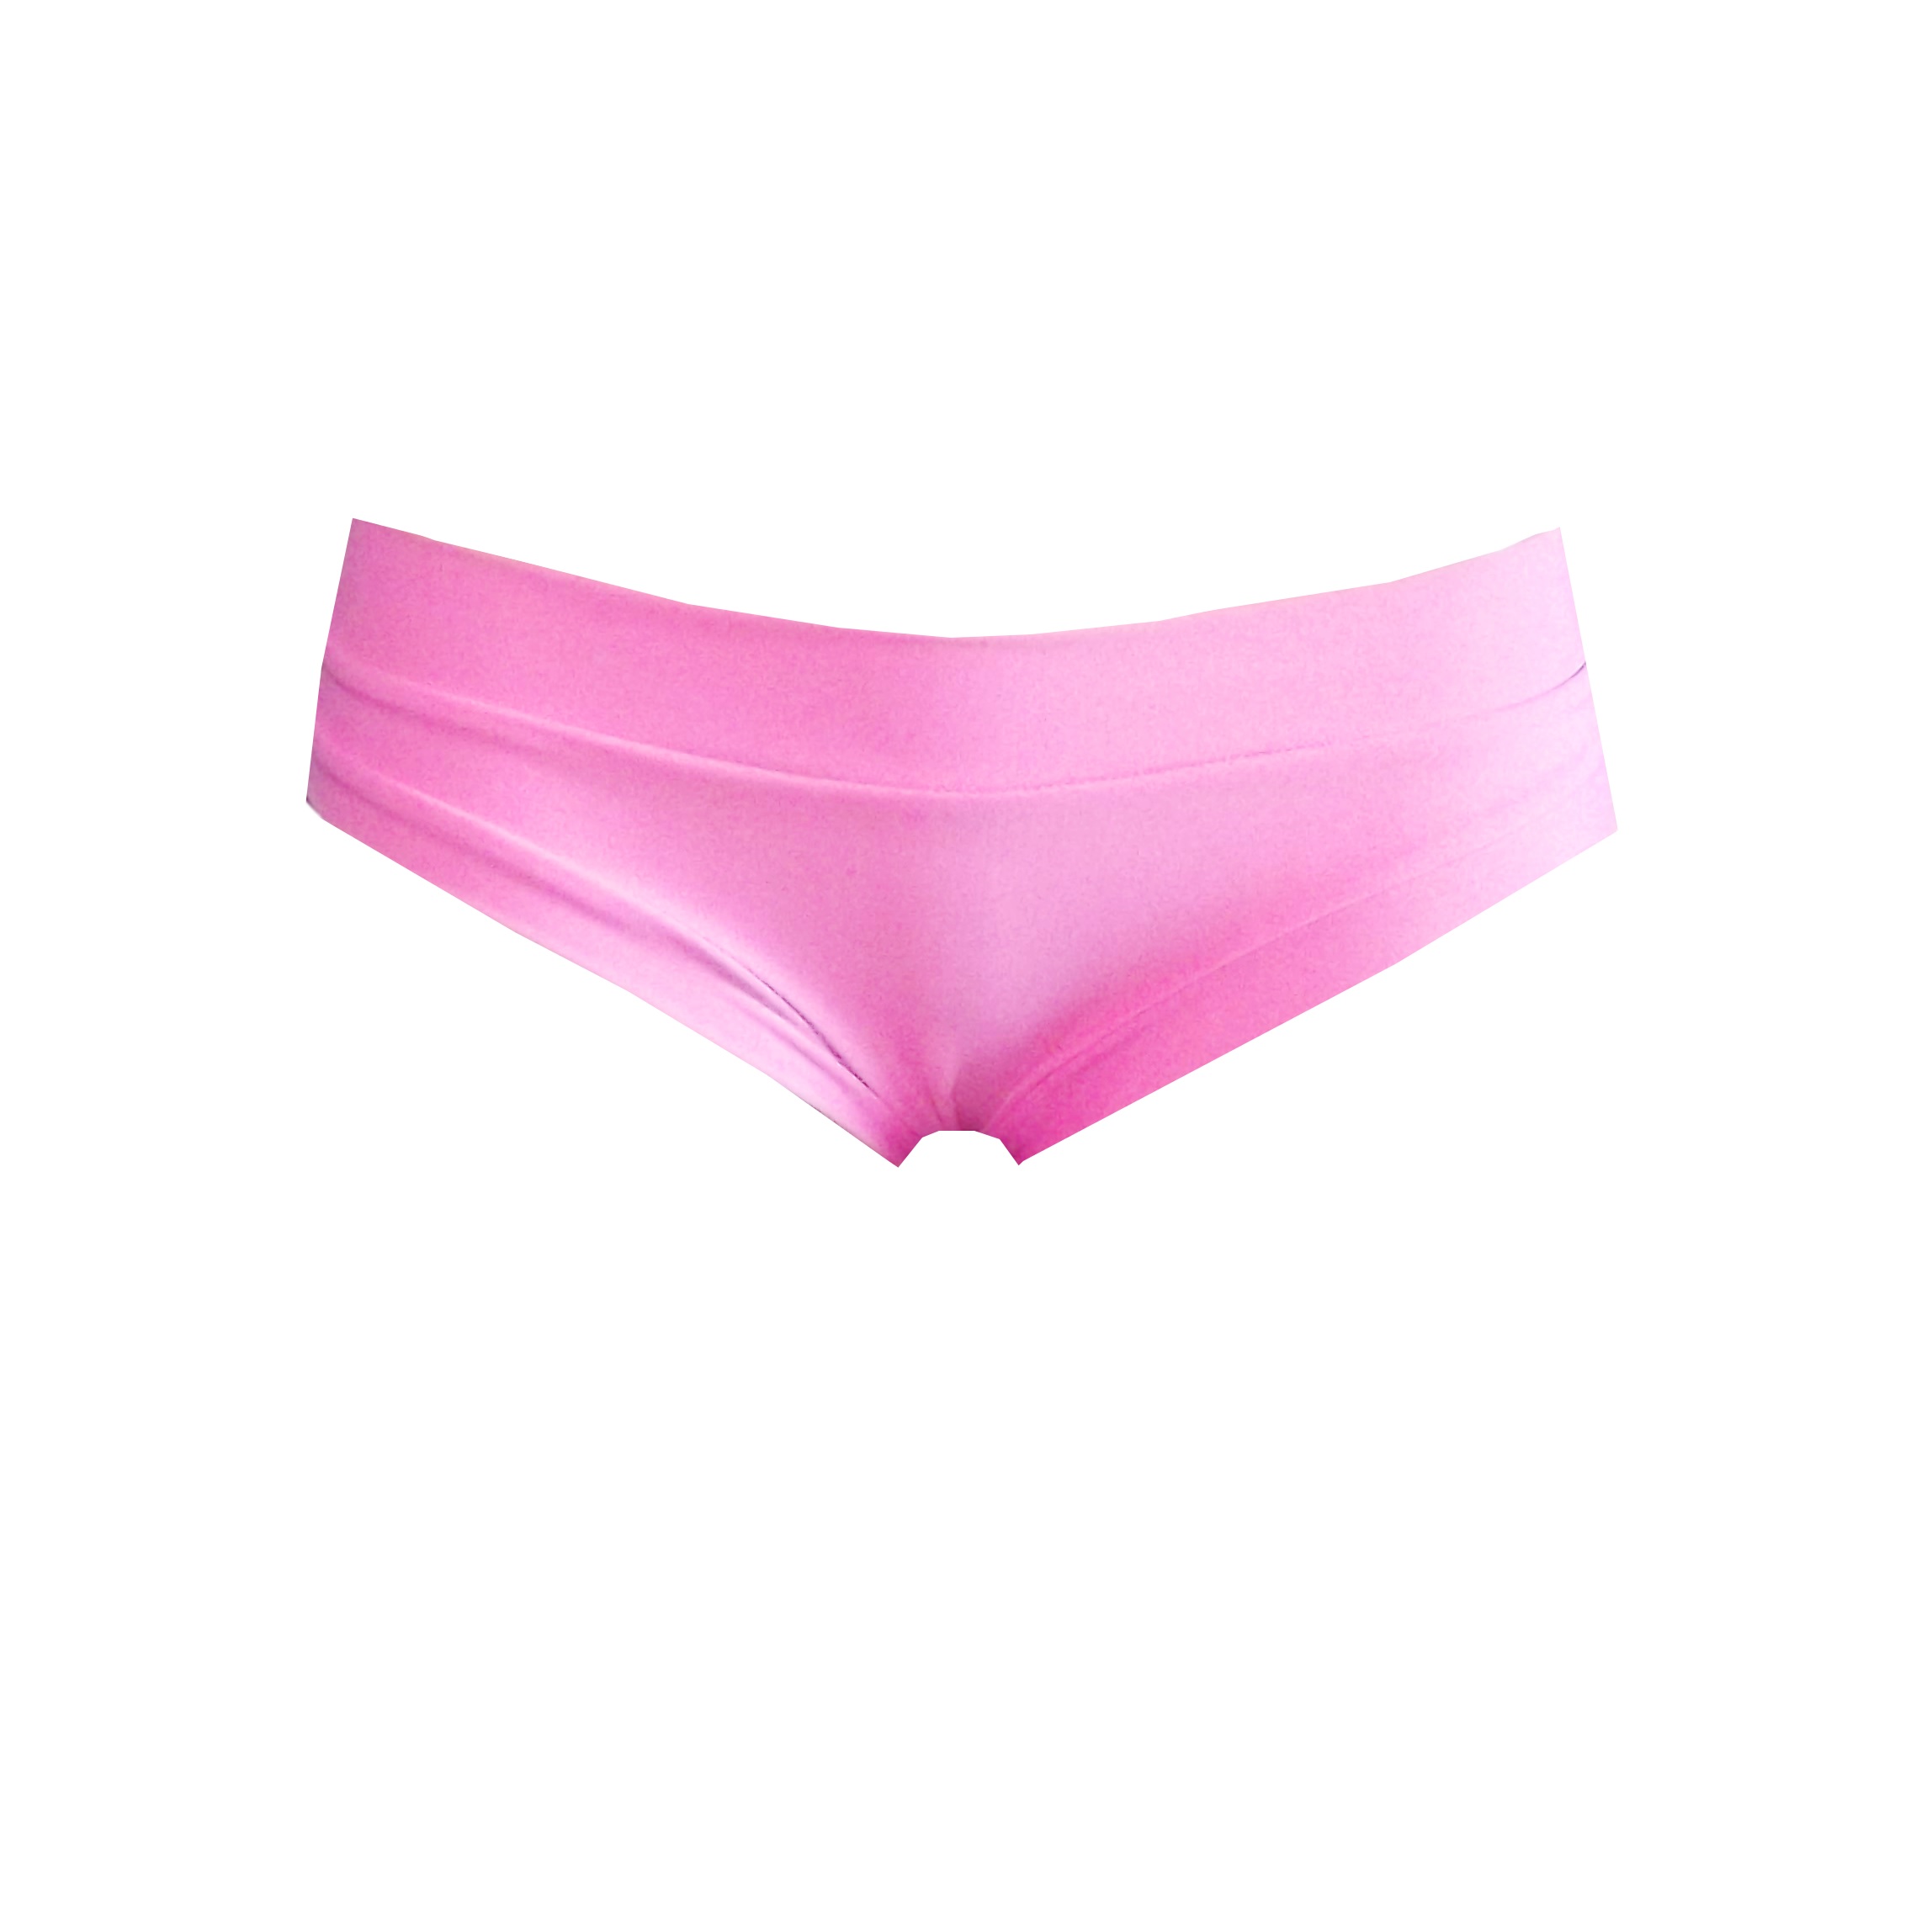 Buy Pink Cheeky Bum Booty Shorts SH6N Online